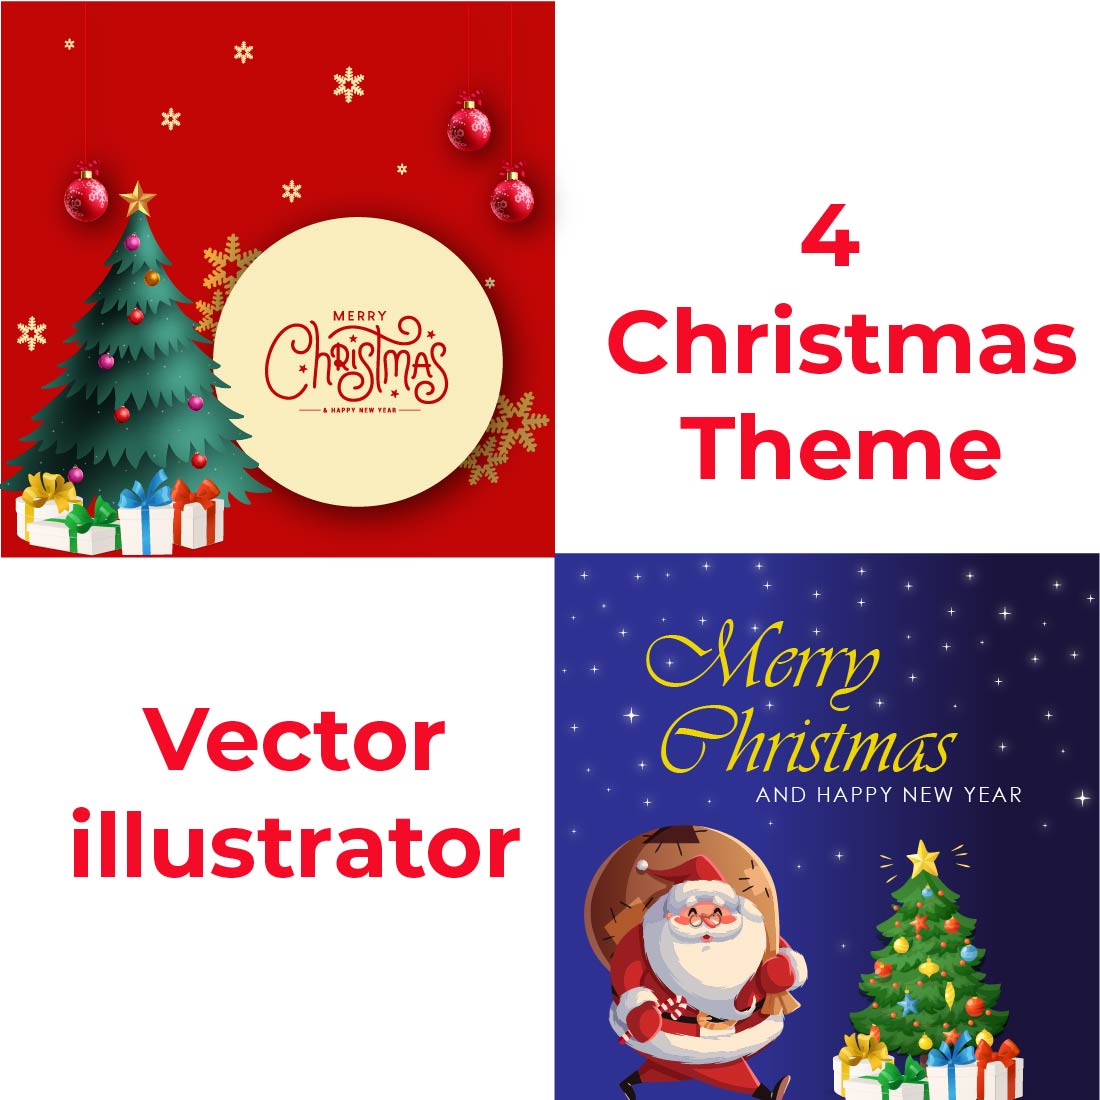 Christmas Theme Vector illustraror preview image.